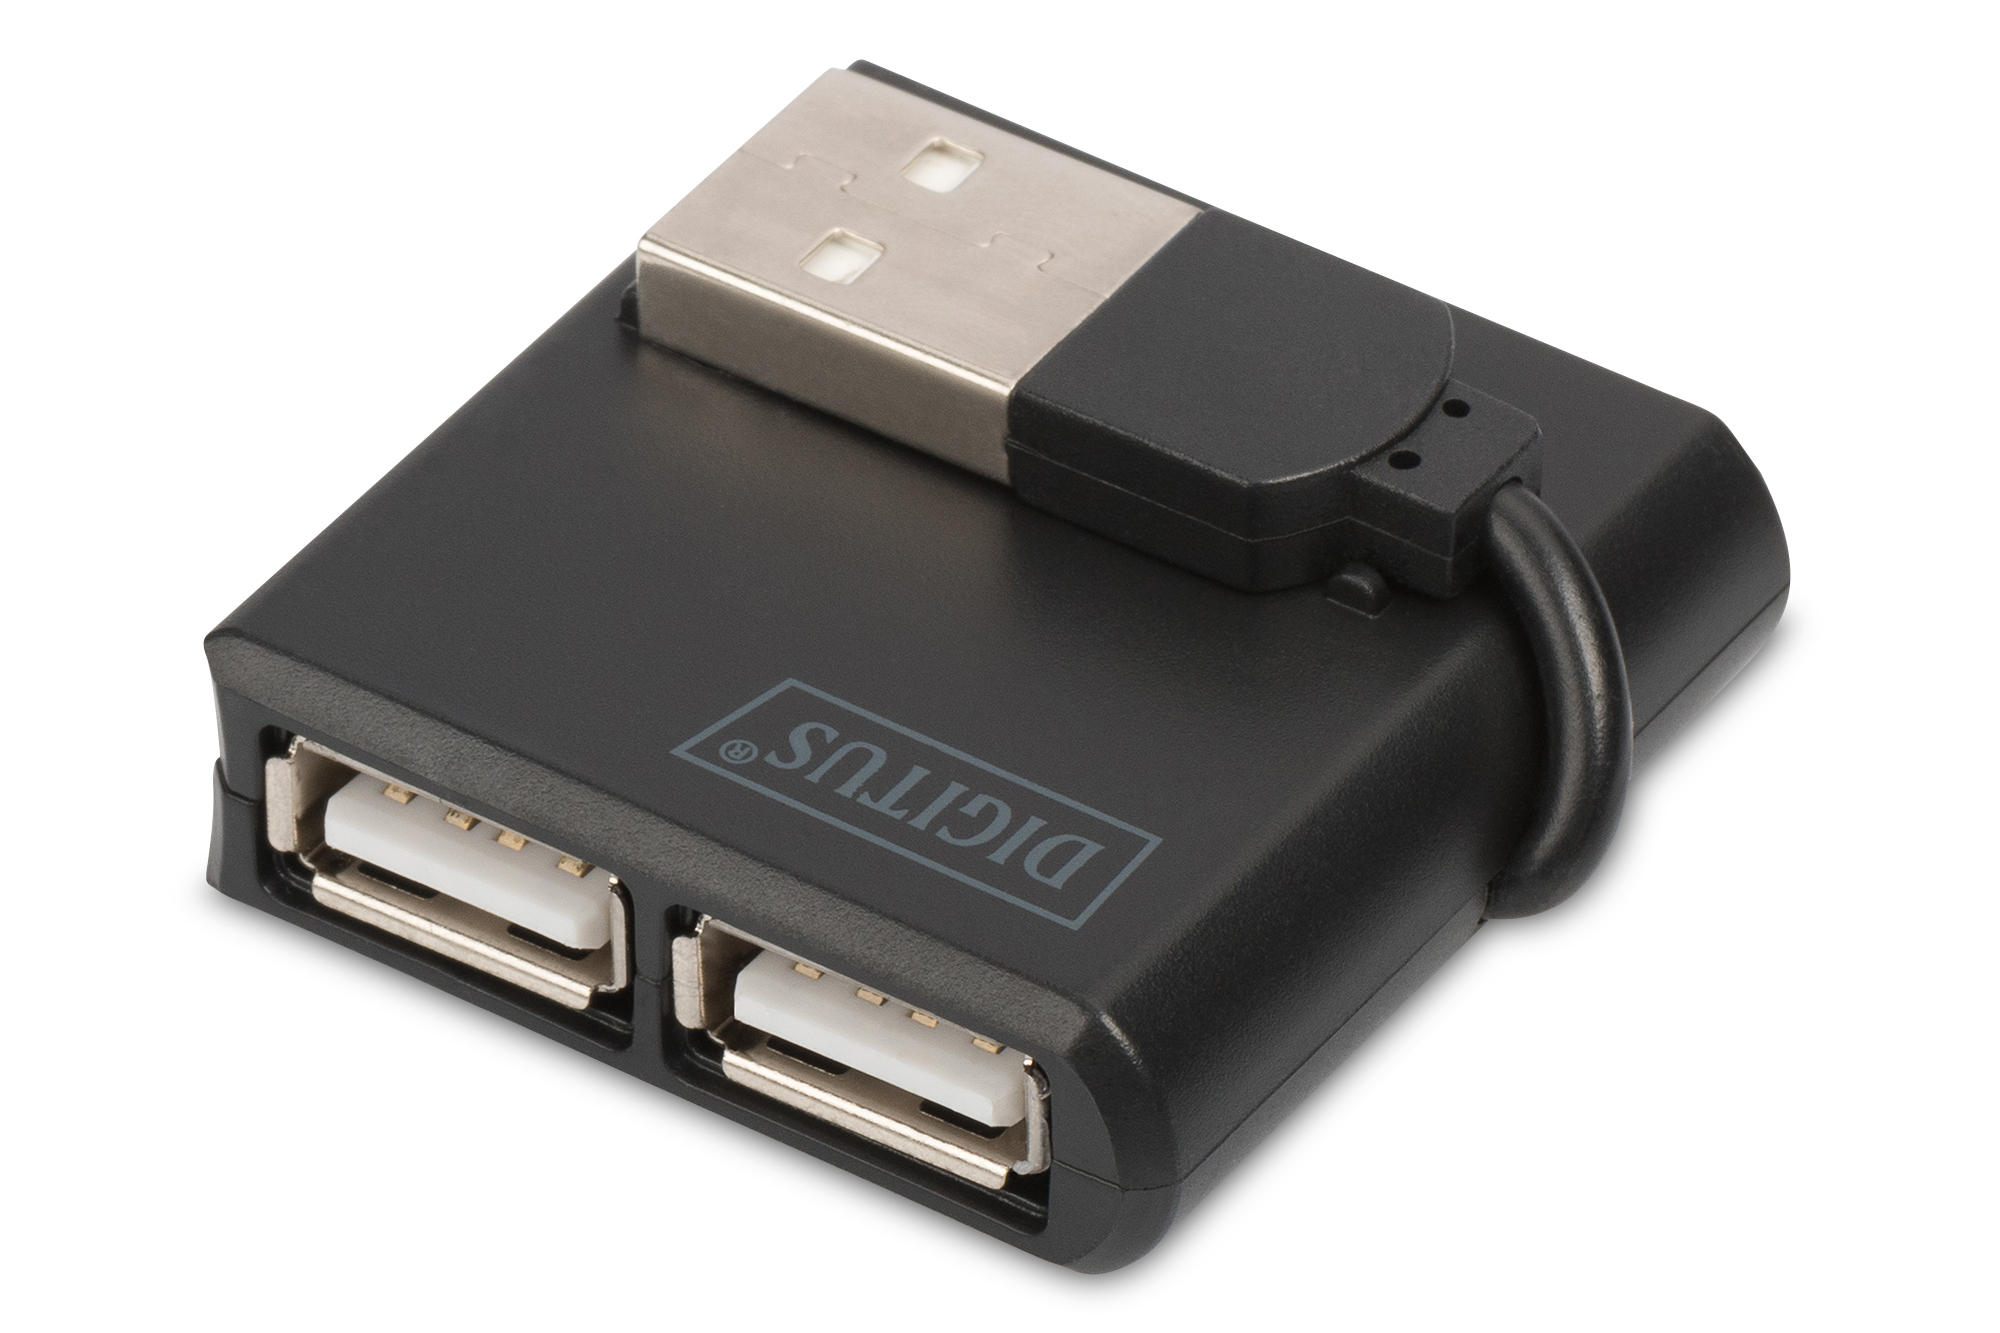 DIGITUS USB 2.0 High-Speed Hub 4-Port